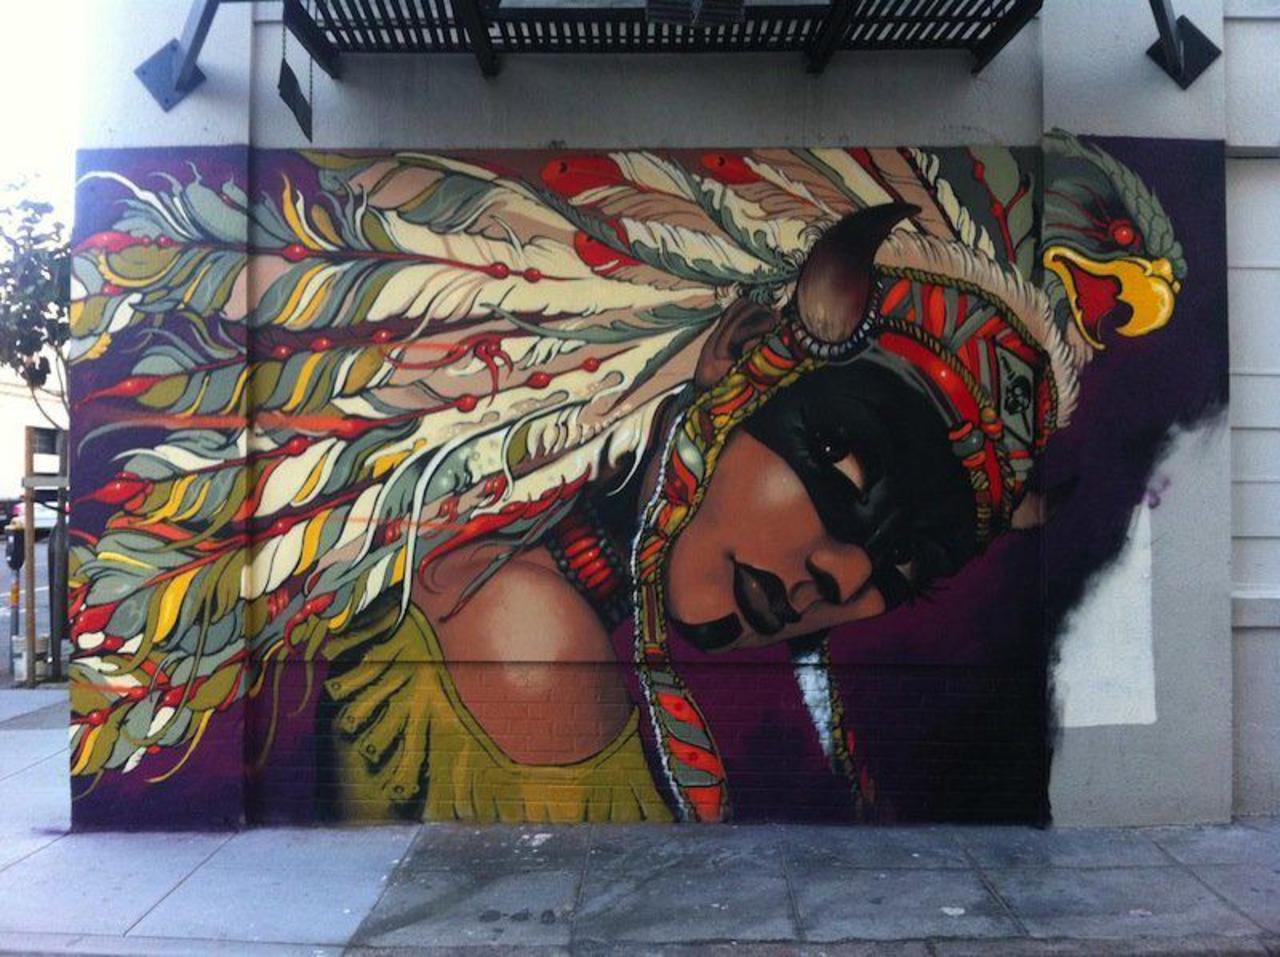 ＠DanielGennaoui: War bonnet. Find more amazing #graffiti in our gallery: http://bit.ly/1GPAOAT #mural #art http://t.co/iRdOkDcv8n